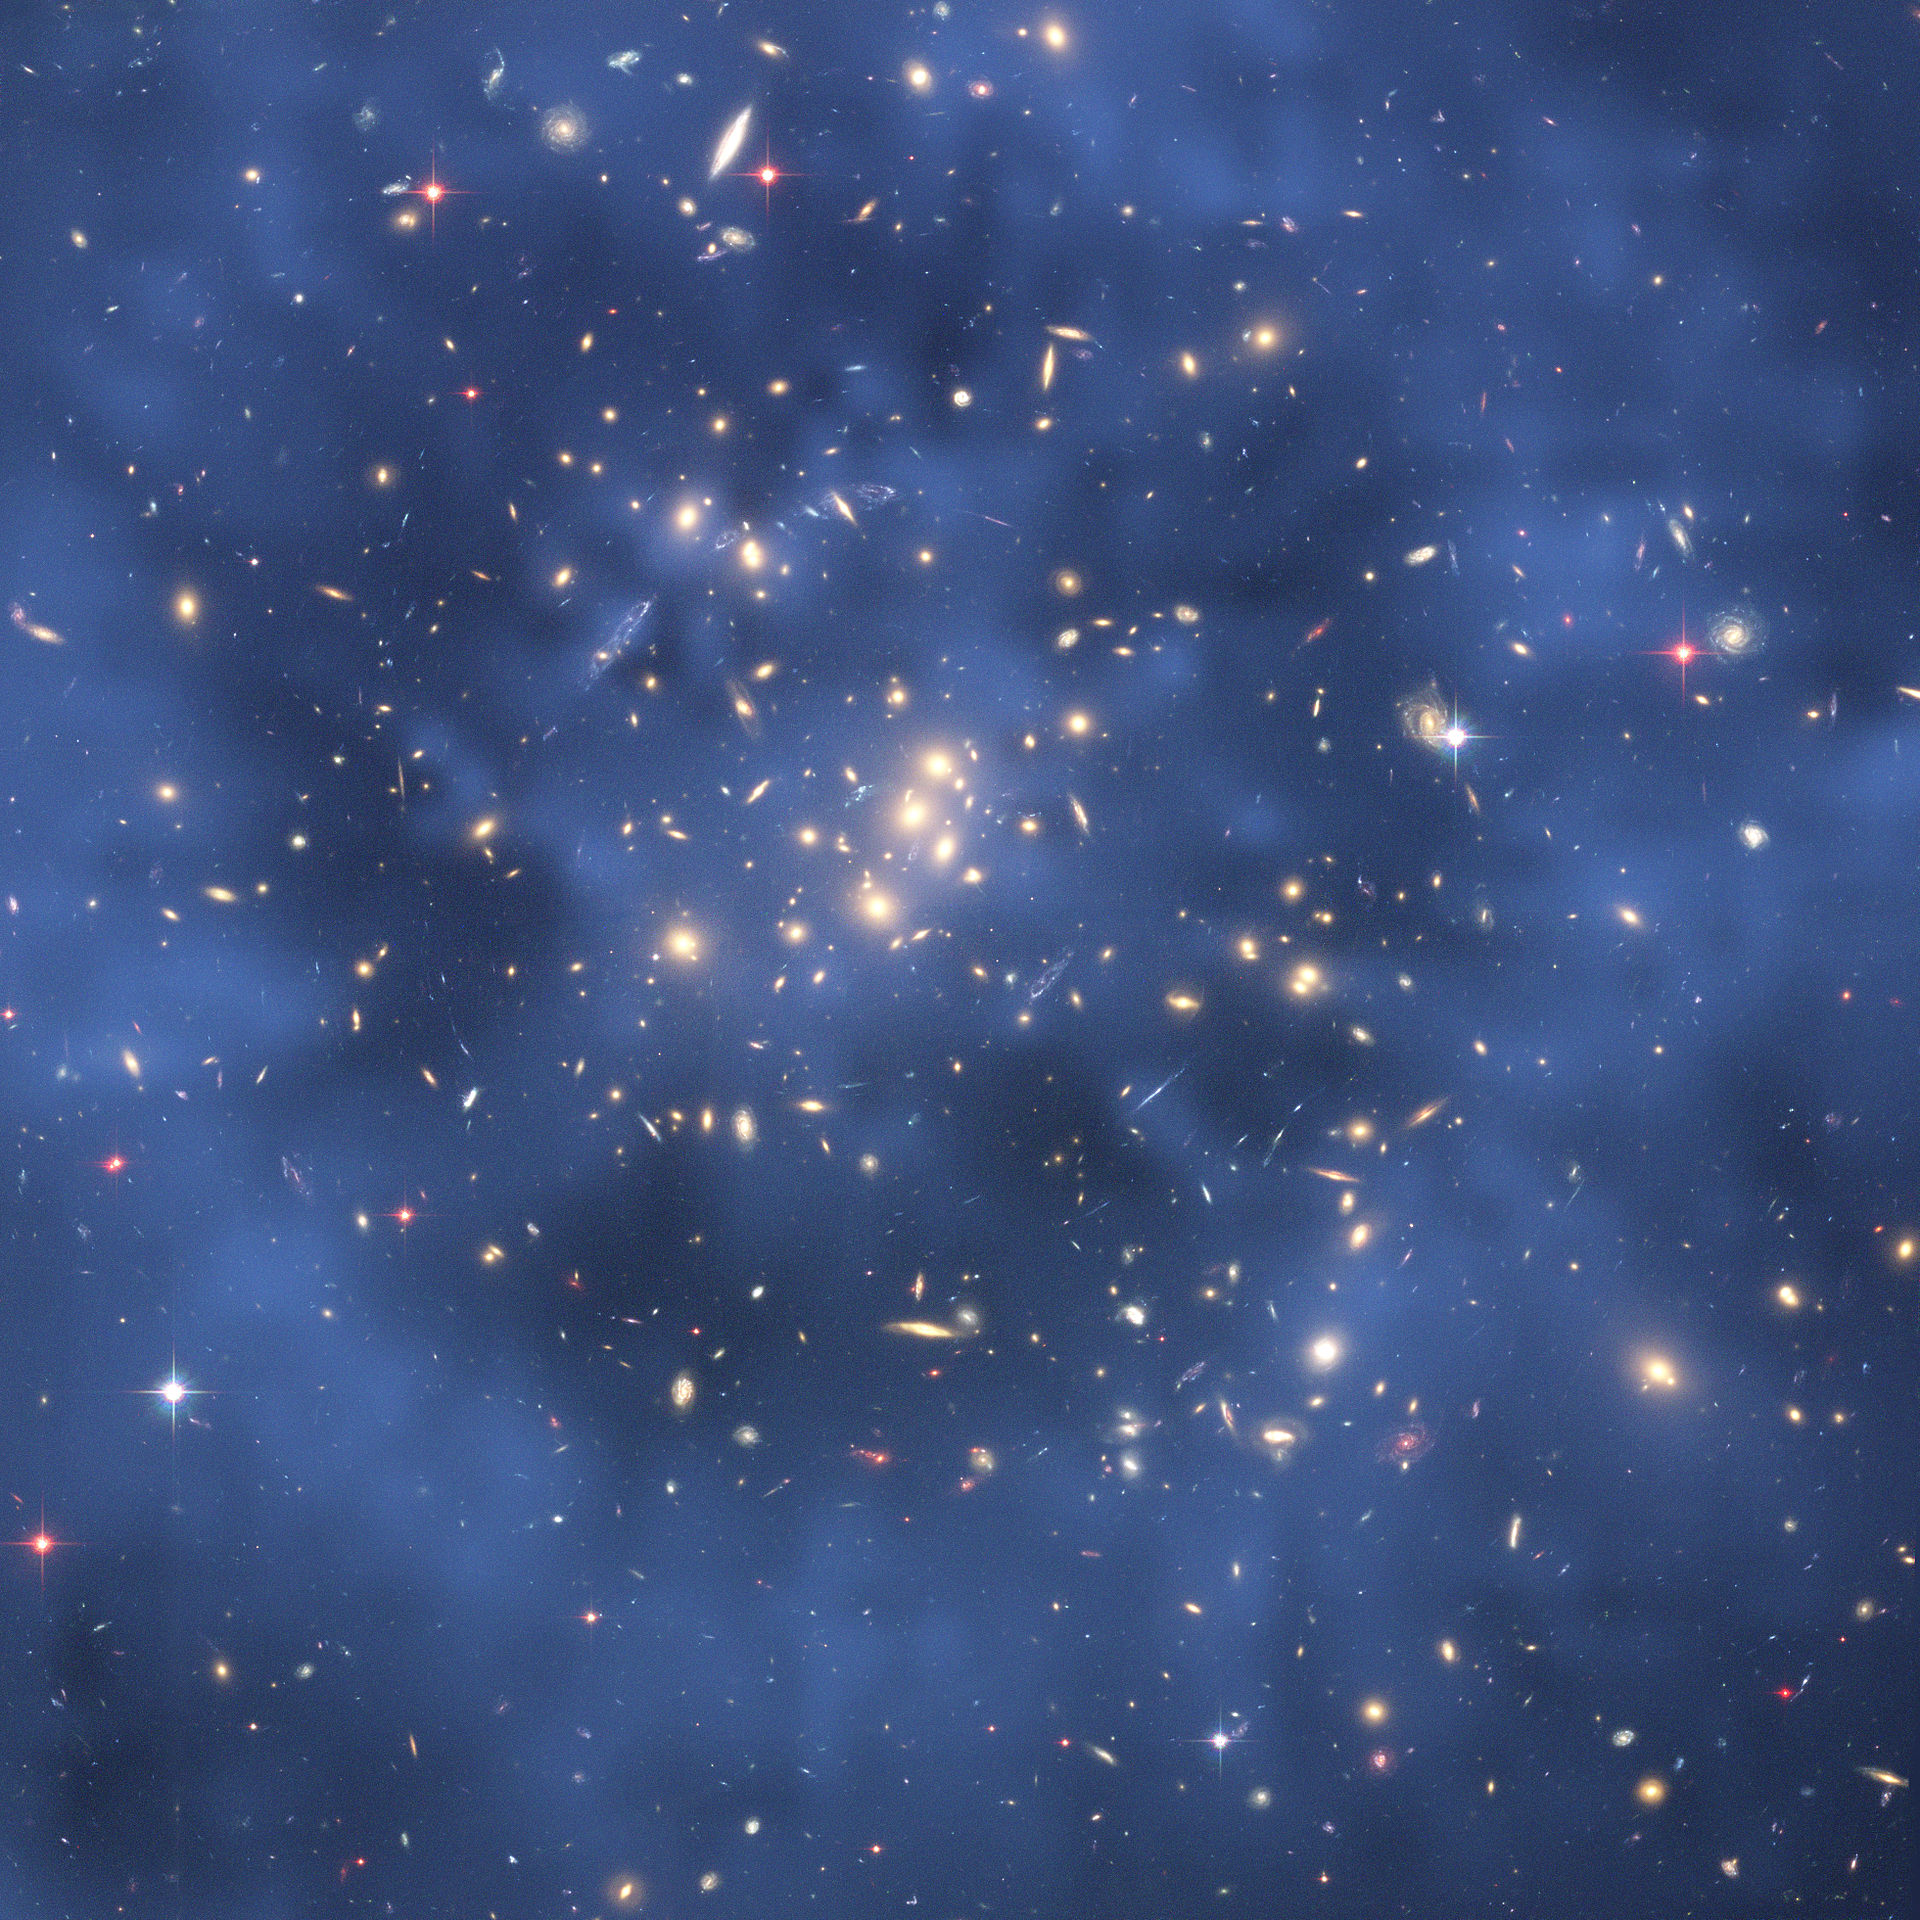 Dark Matter observed